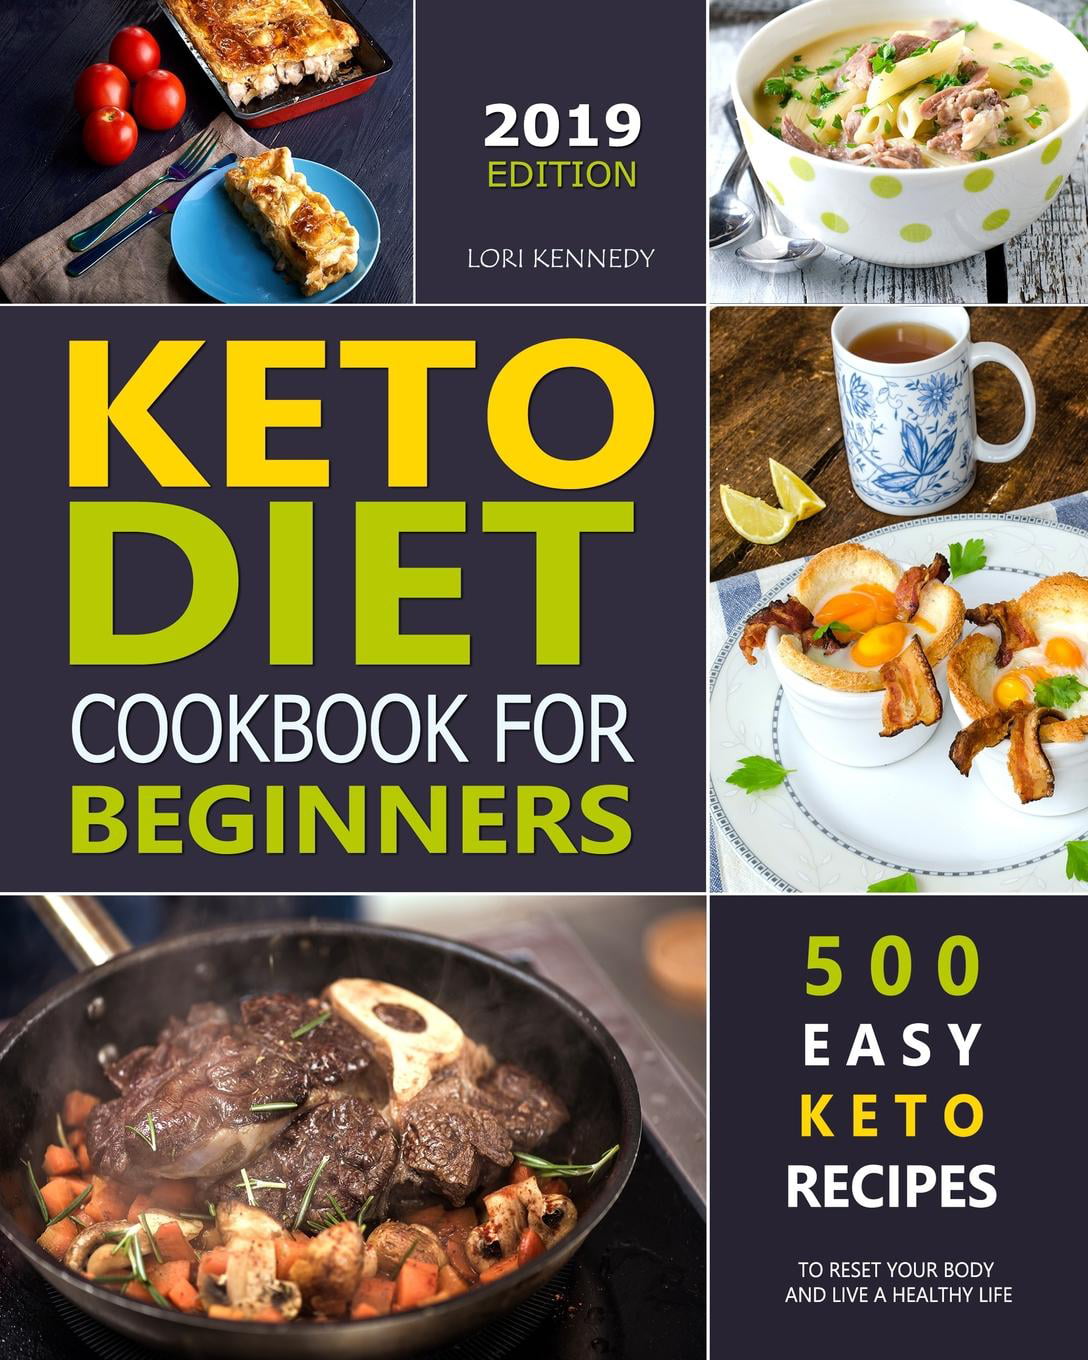 Keto Diet: Keto Diet Cookbook For Beginners : 500 Easy Keto Recipes to